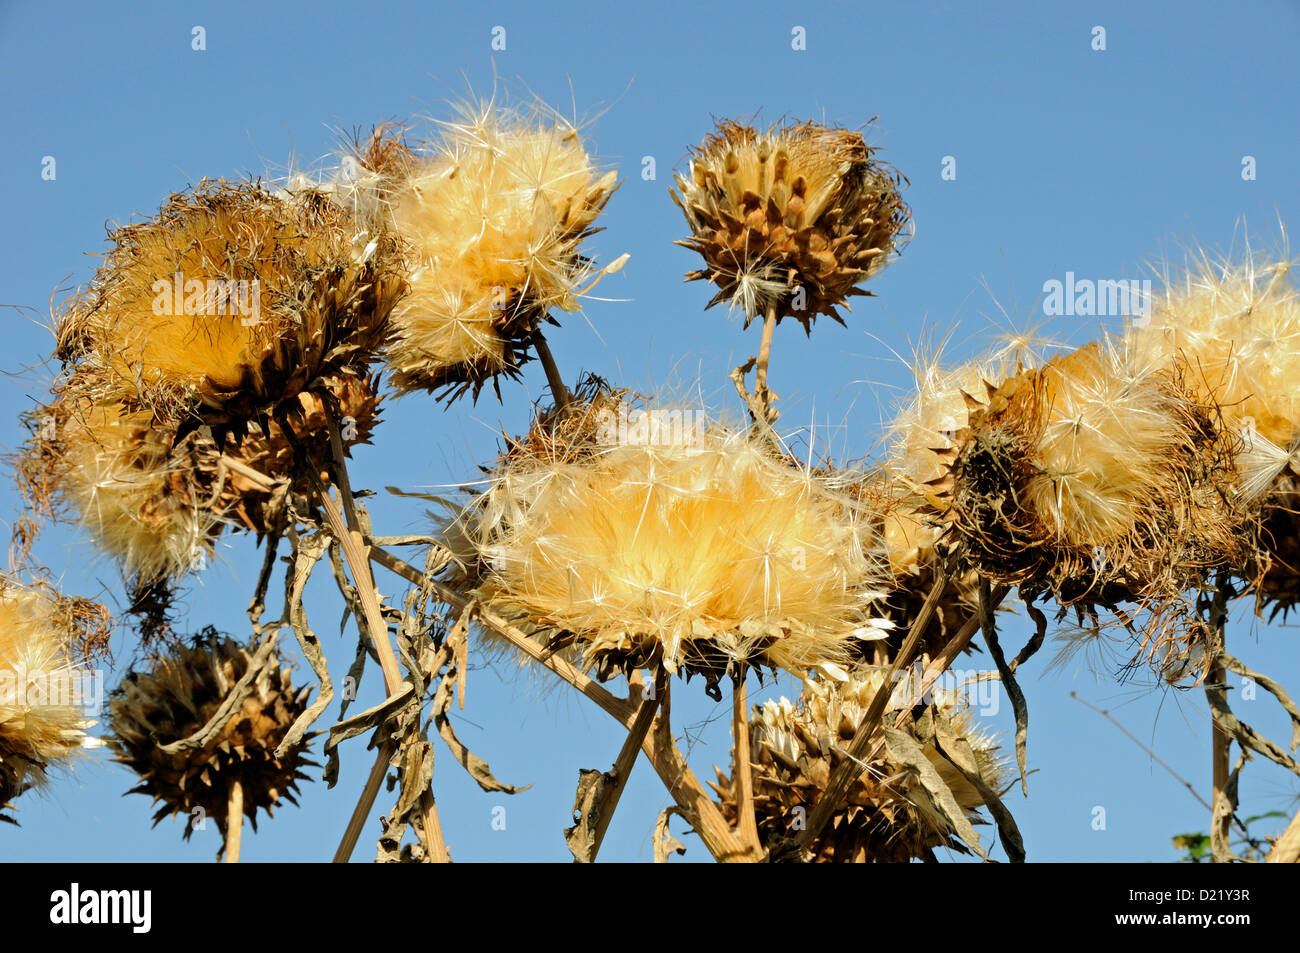 Cardoon (Cynara cardunculus) seedheads against a clear blue sky in Autumn Stock Photo